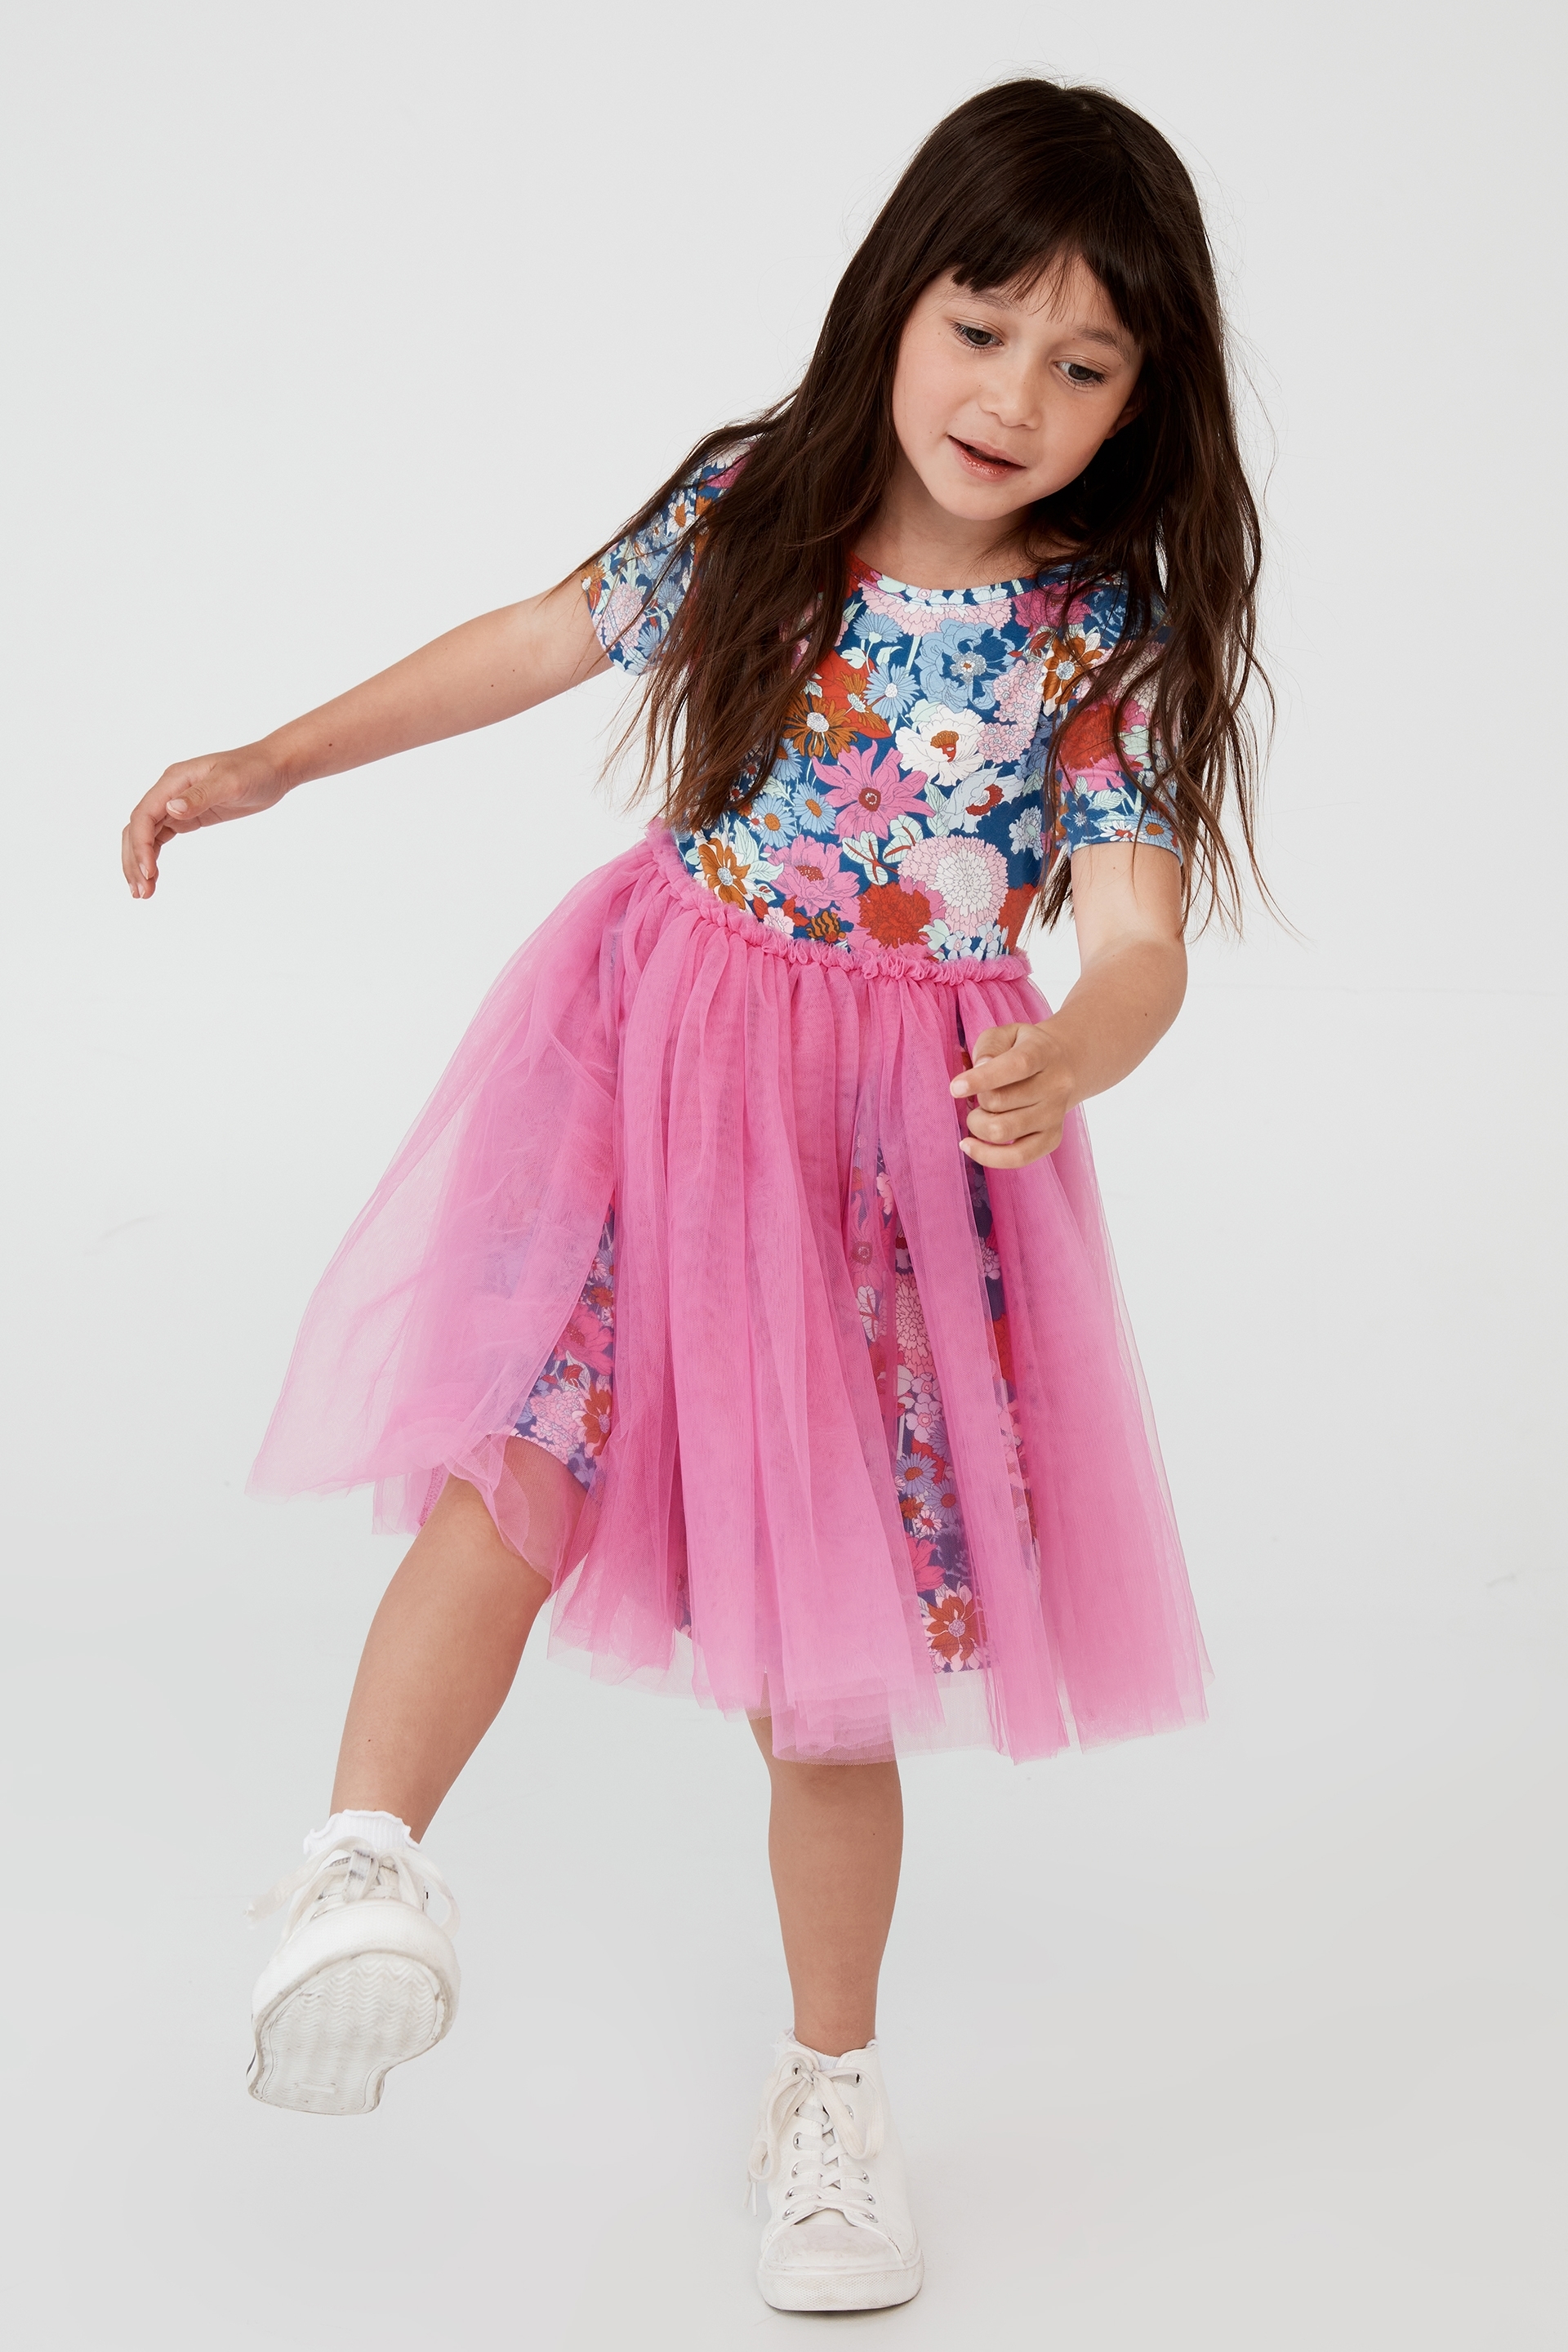 Cotton On Kids - Ivy Dress Up Dress - Boho floral/pink gerbera